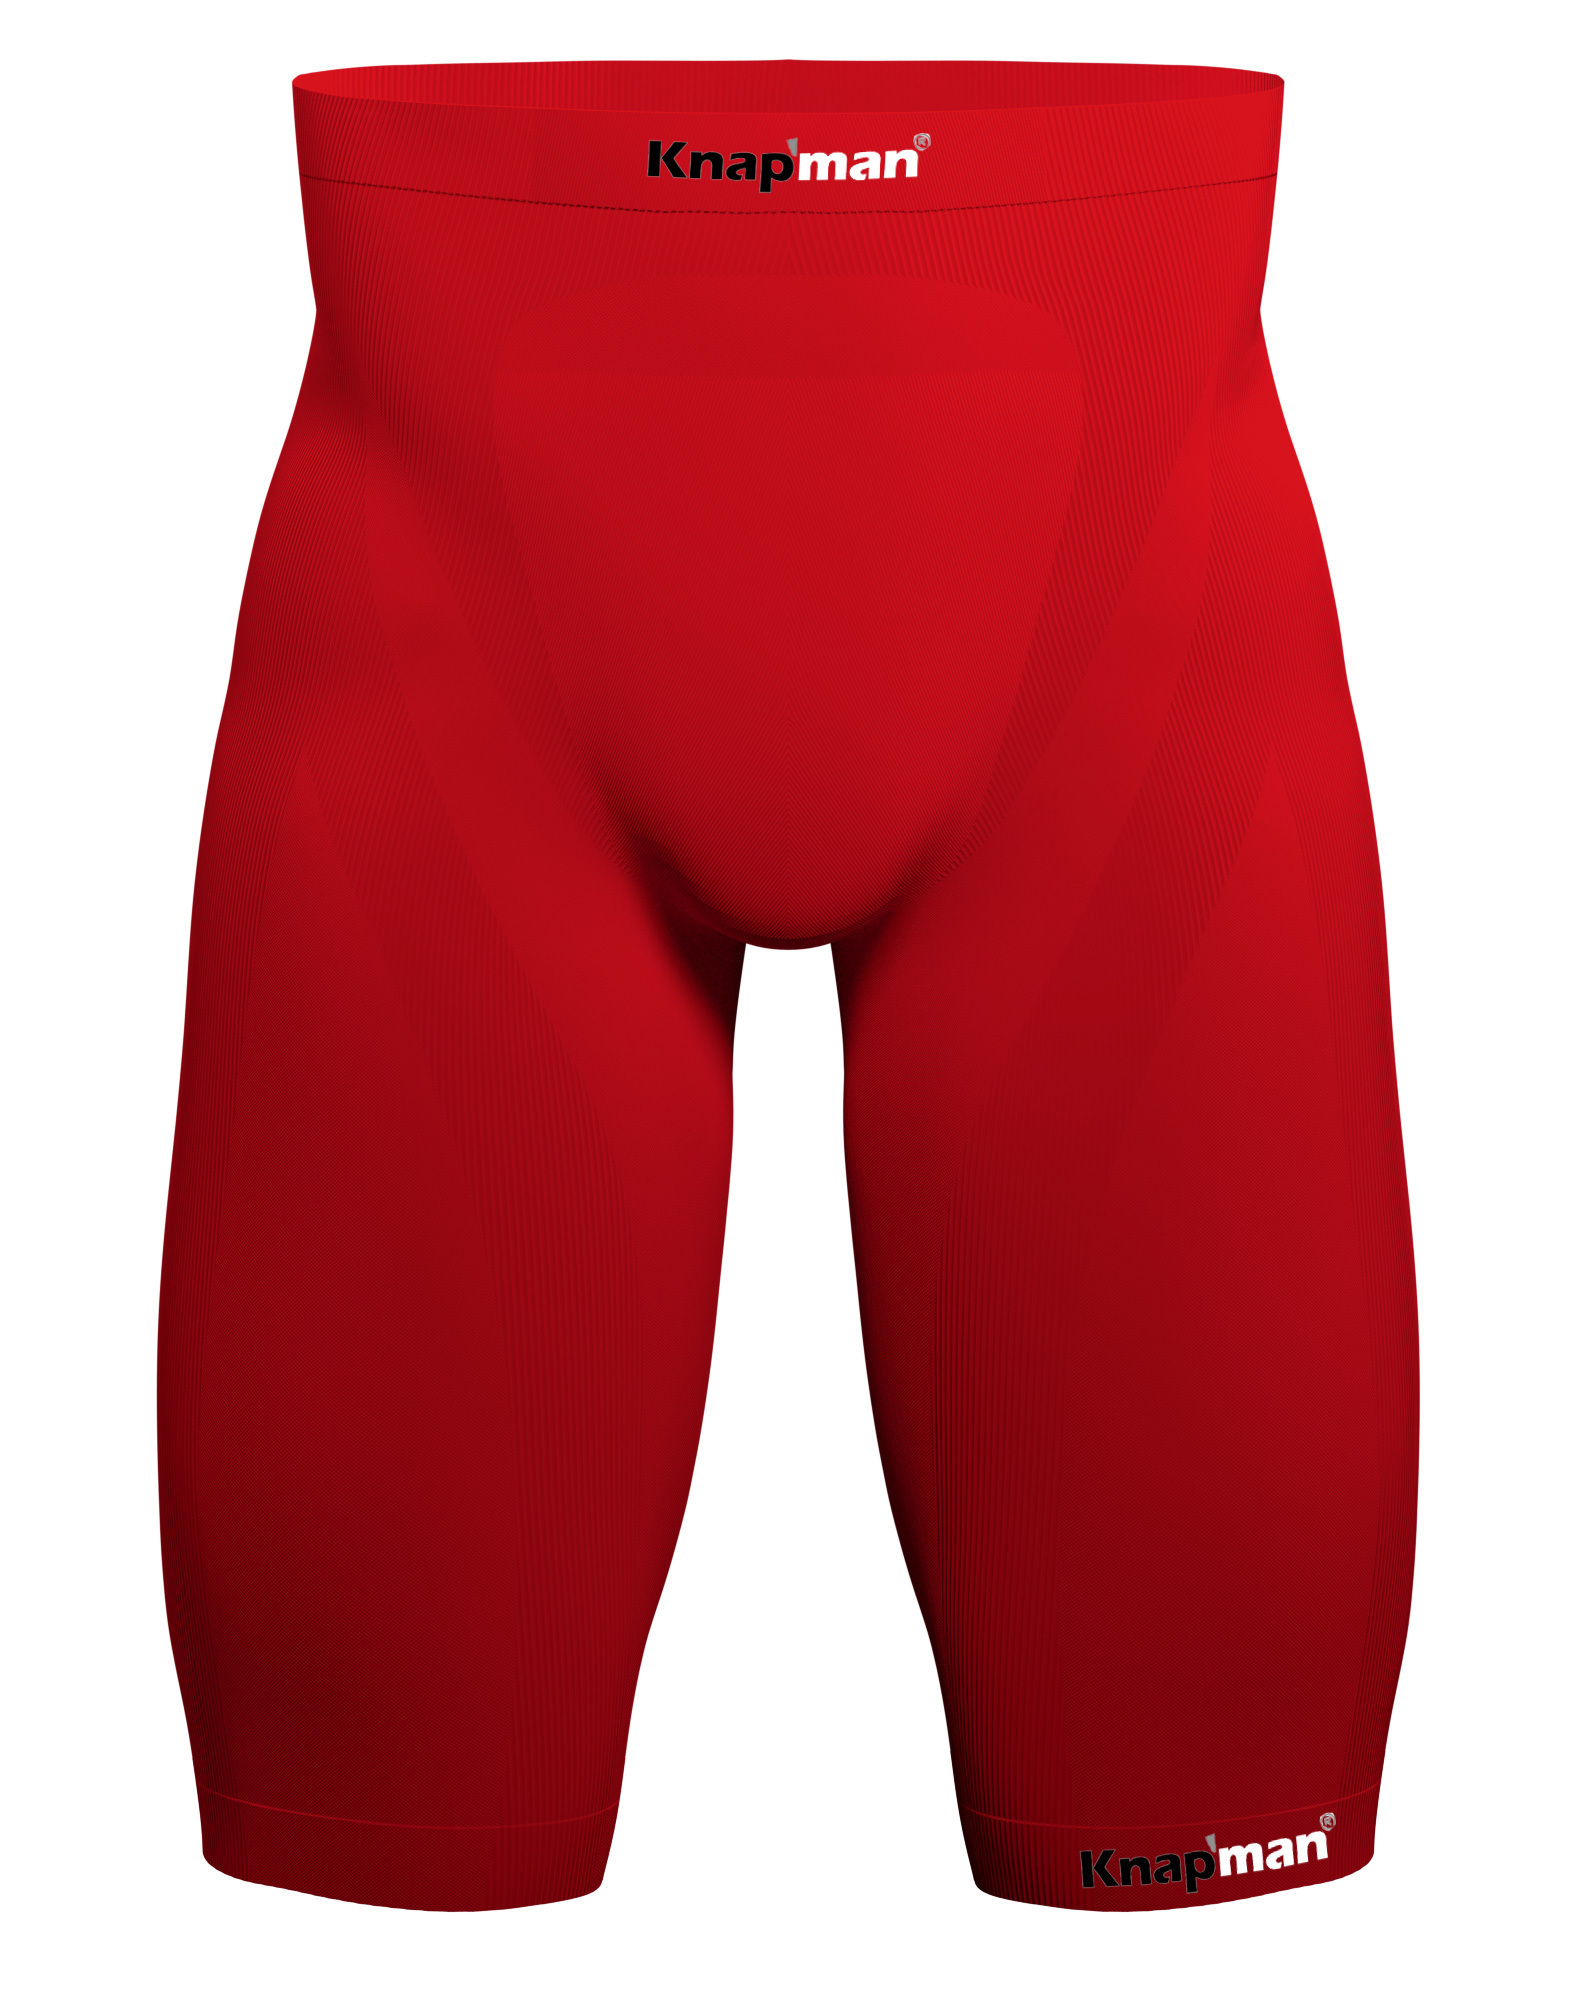 https://www.knapman.eu/product/126-large-knapman-mens-compression-shorts-45-red.jpg